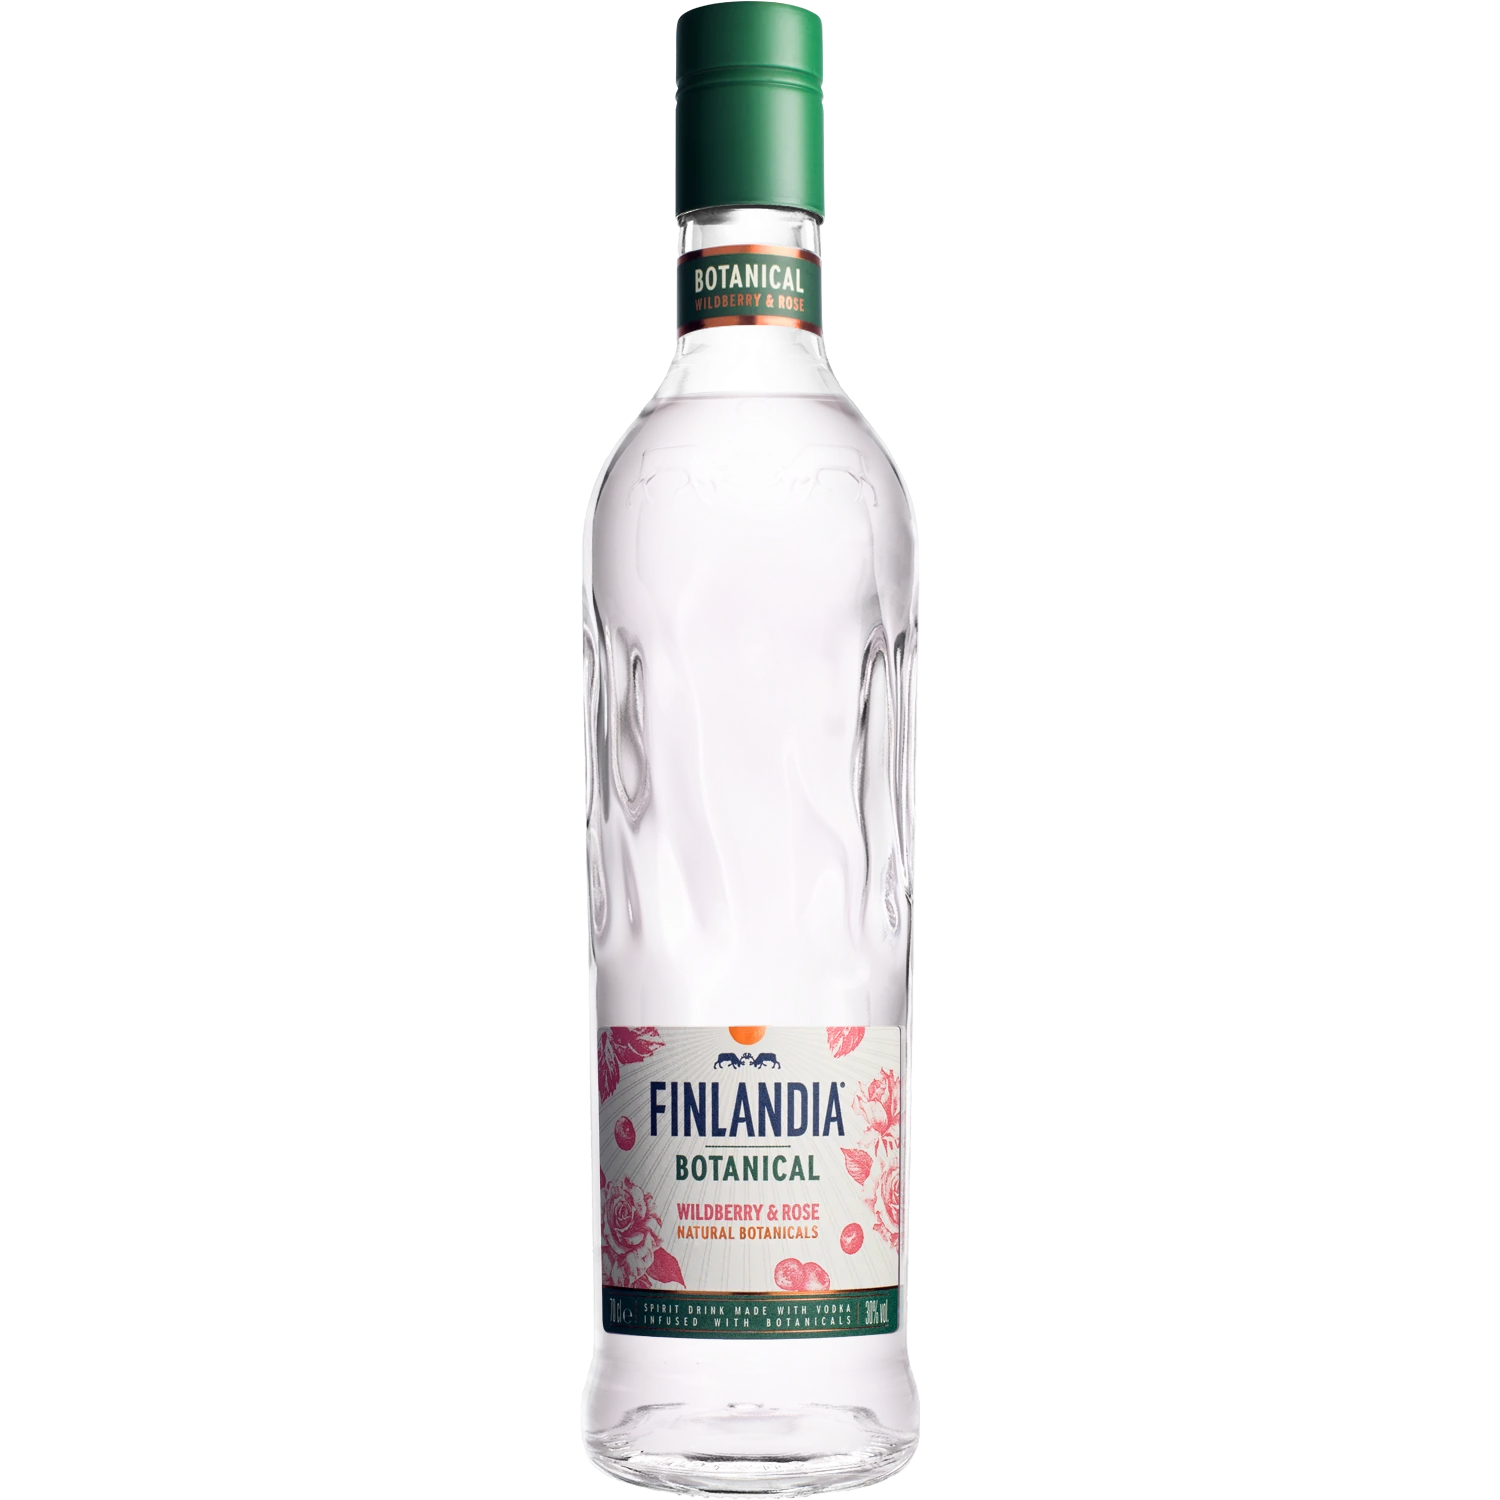 Wódka Finlandia botanical wildberry rose 30% 0.5L